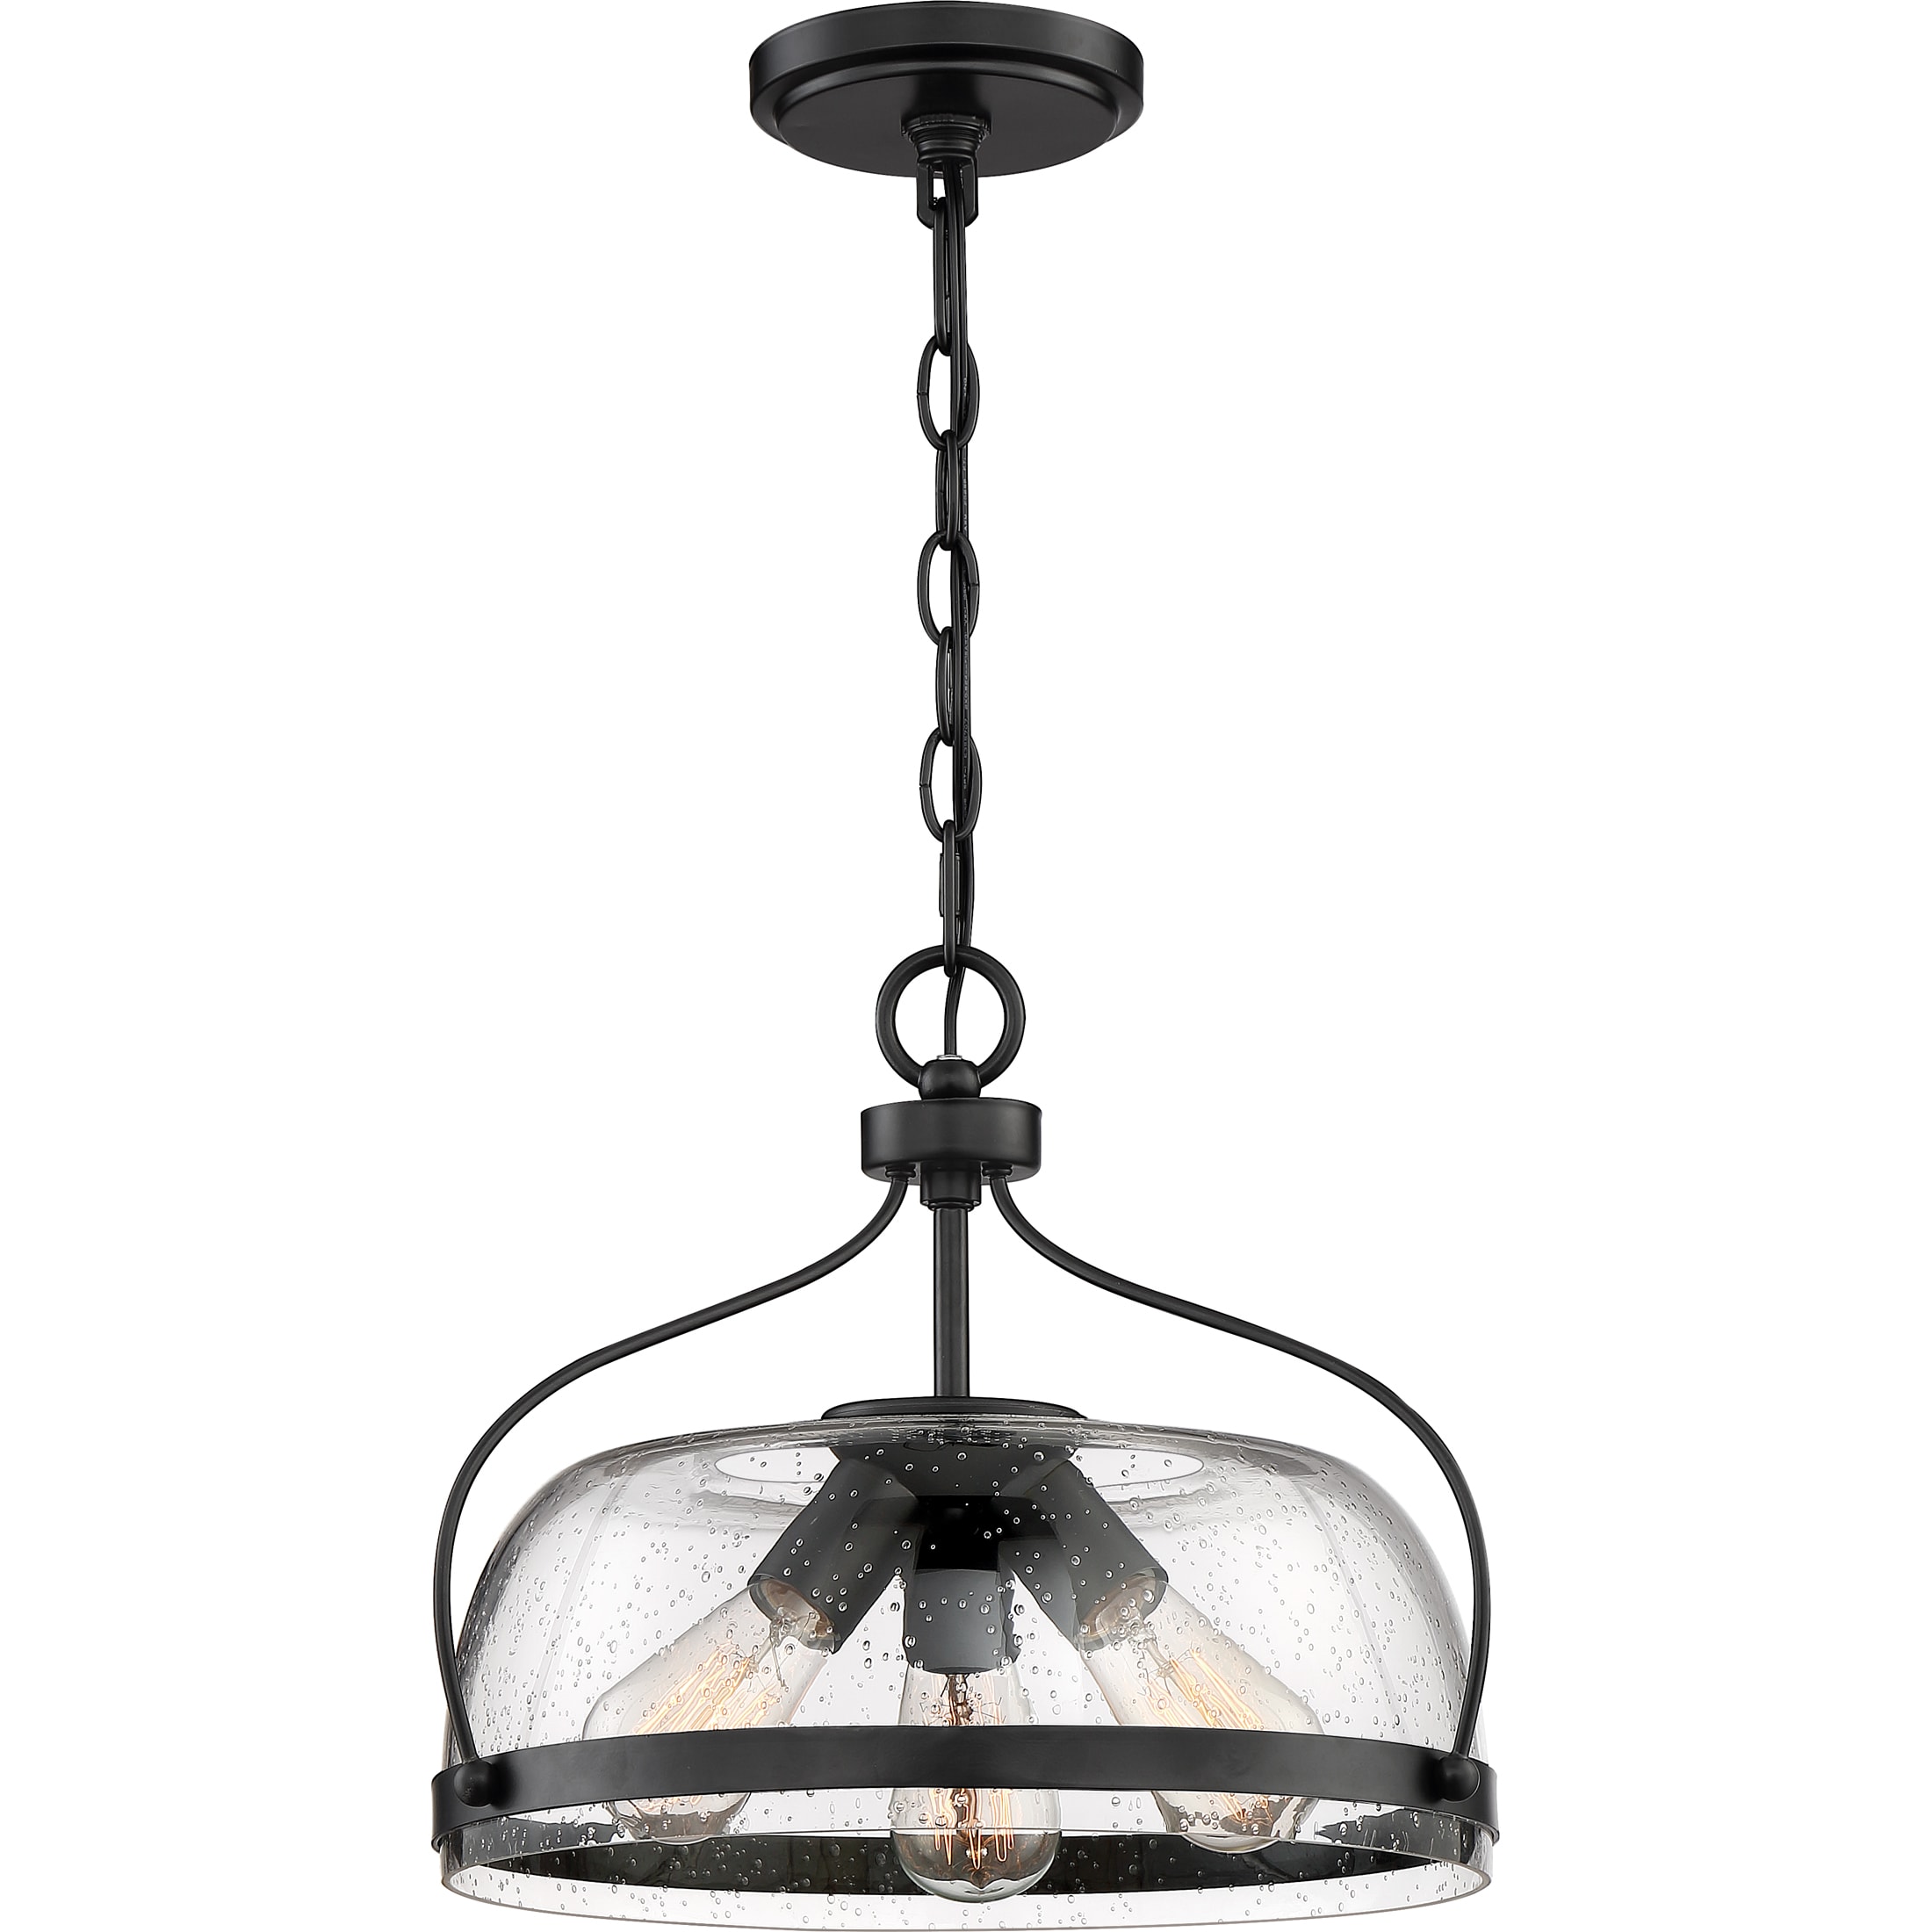 Industrial Black Framework Single Pendant Light Hanging Ceiling Lamp Fixture 